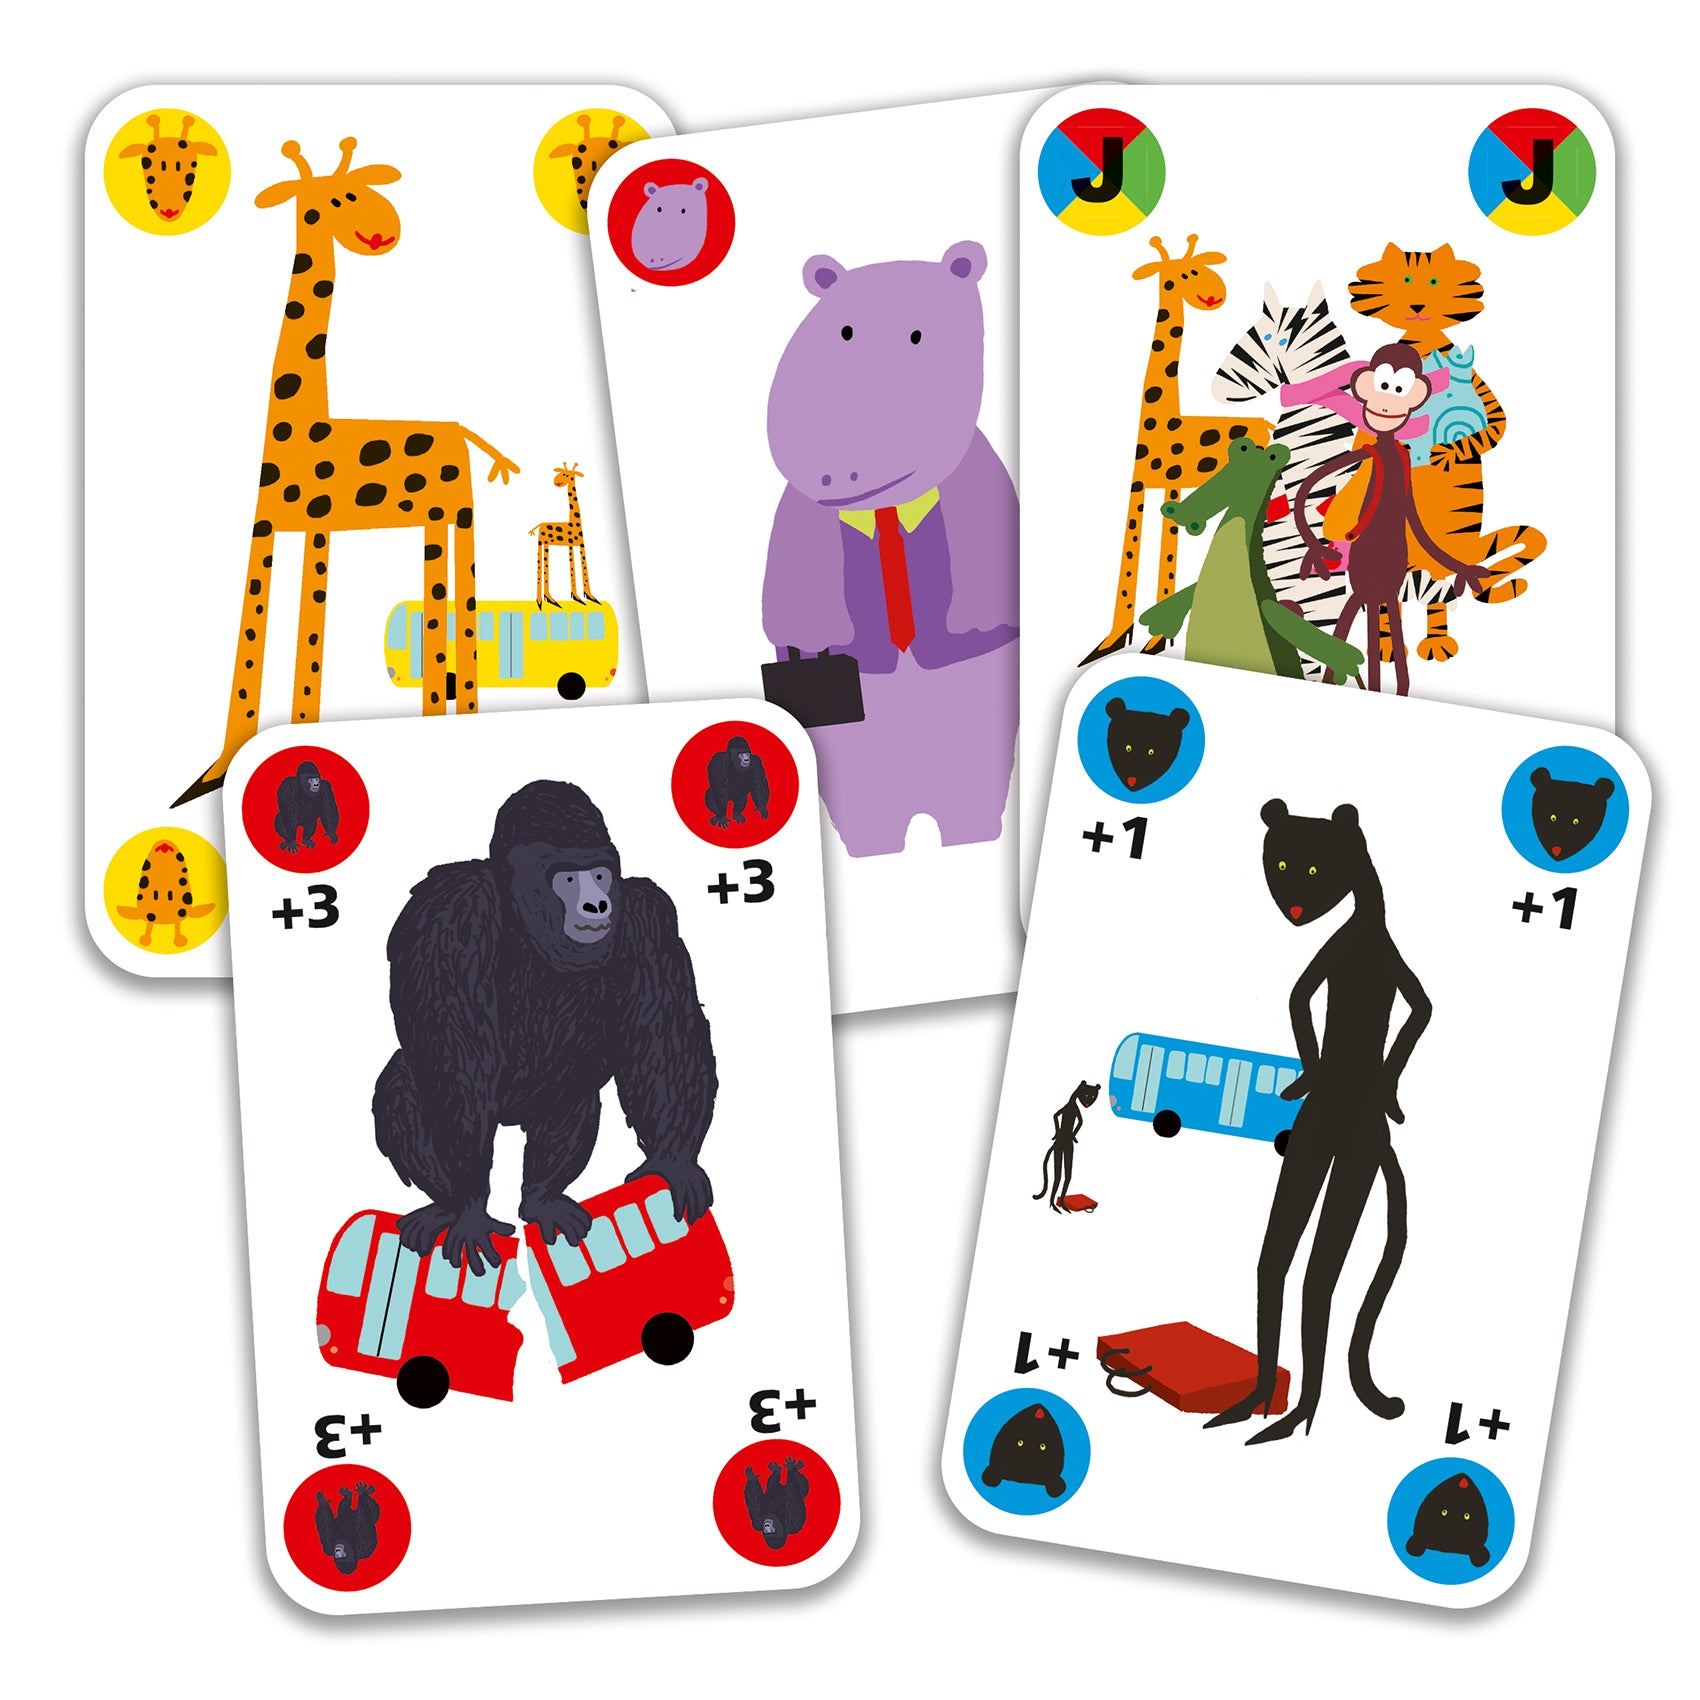 Djeco | Gorilla Game